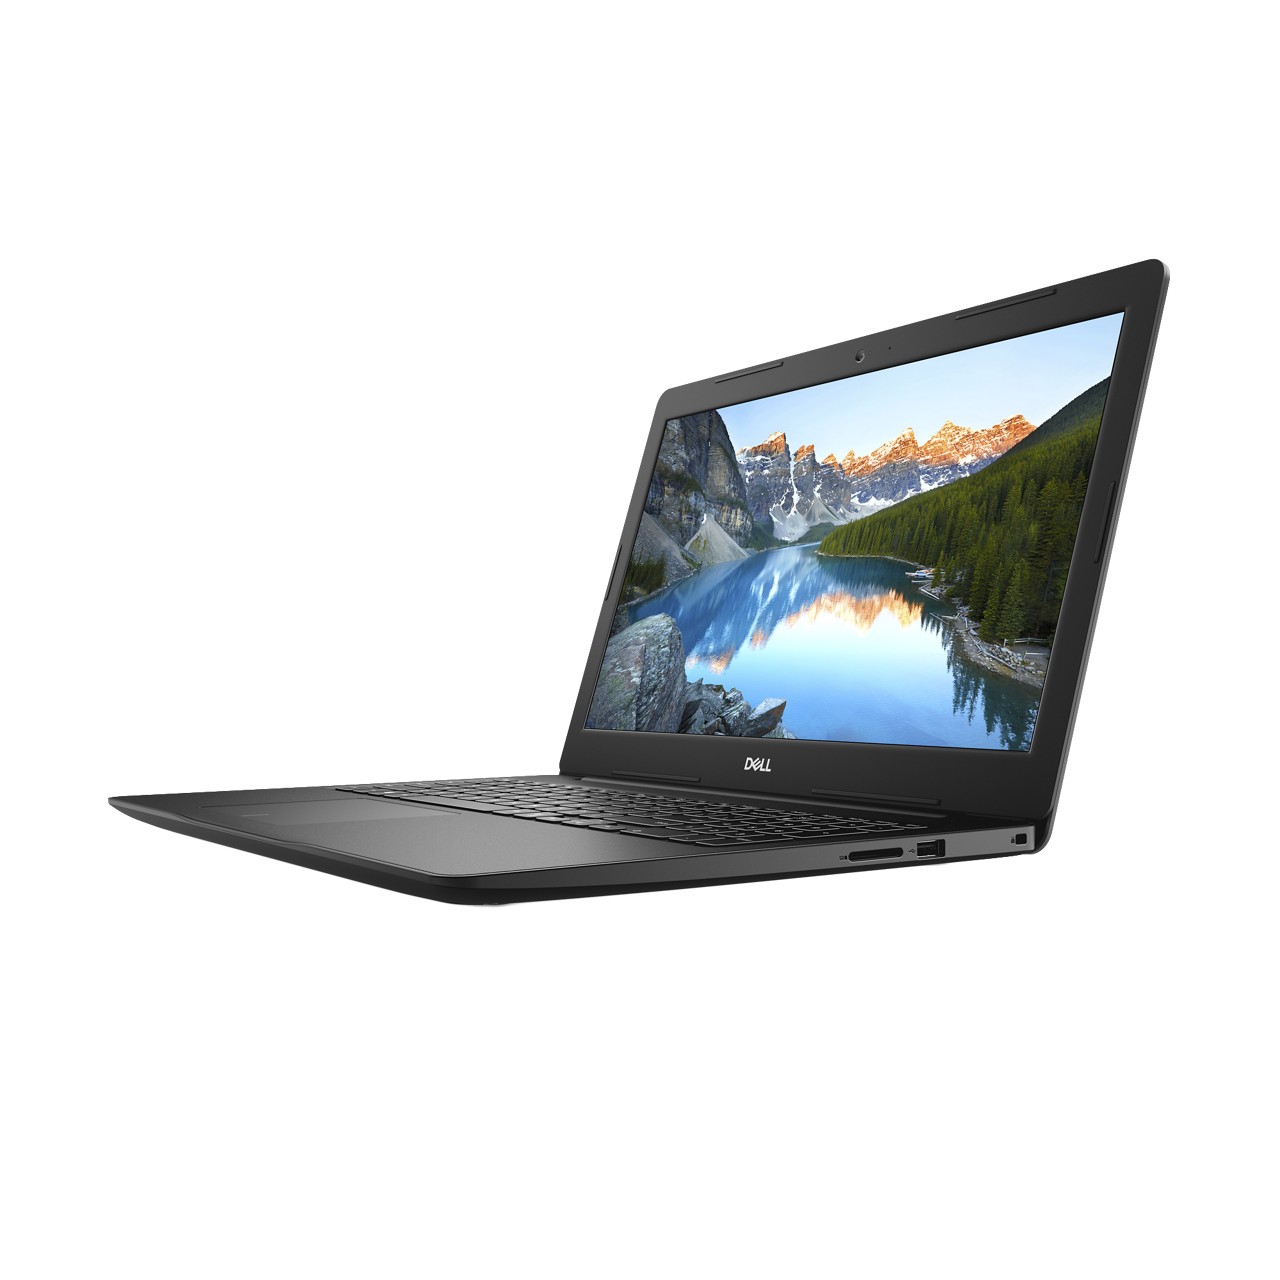 Notebook Dell Inspiron 3584 Core I3 8130u Memoria 4gb Hd 1tb Tela Led 15.6' Hd Windows 10 Home 